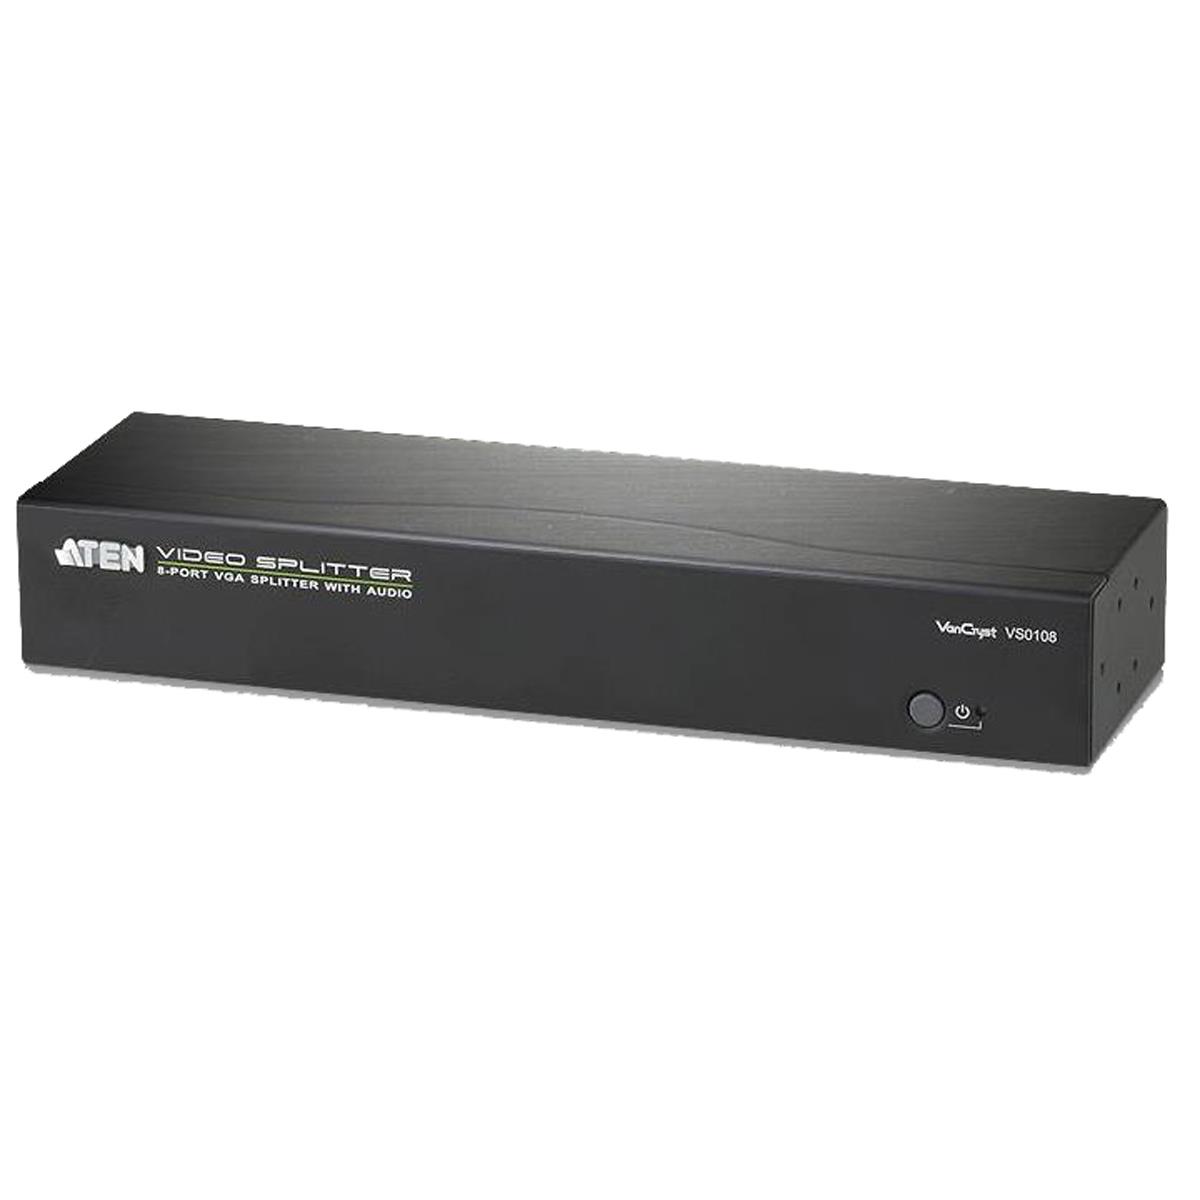 Image of Aten VS0108 8-Port VGA Splitter with Audio